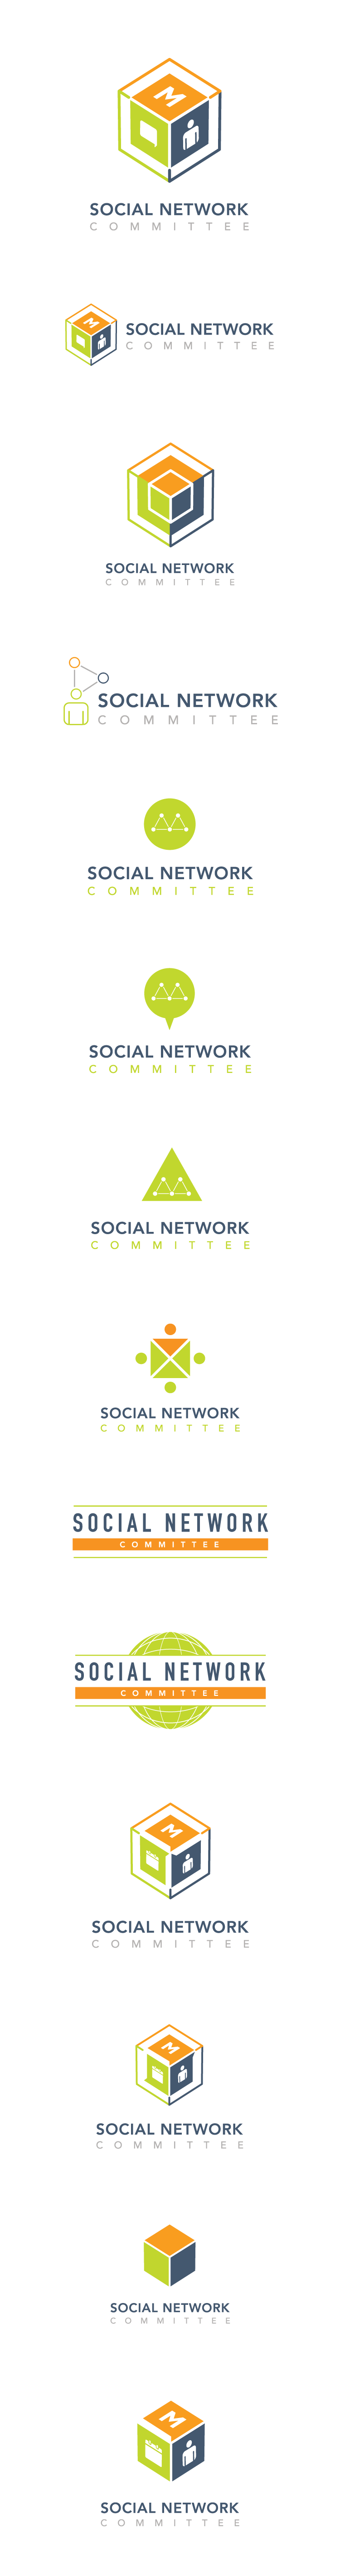 flyers Promotional Momentum marketing   logo social network cube box geometric banner